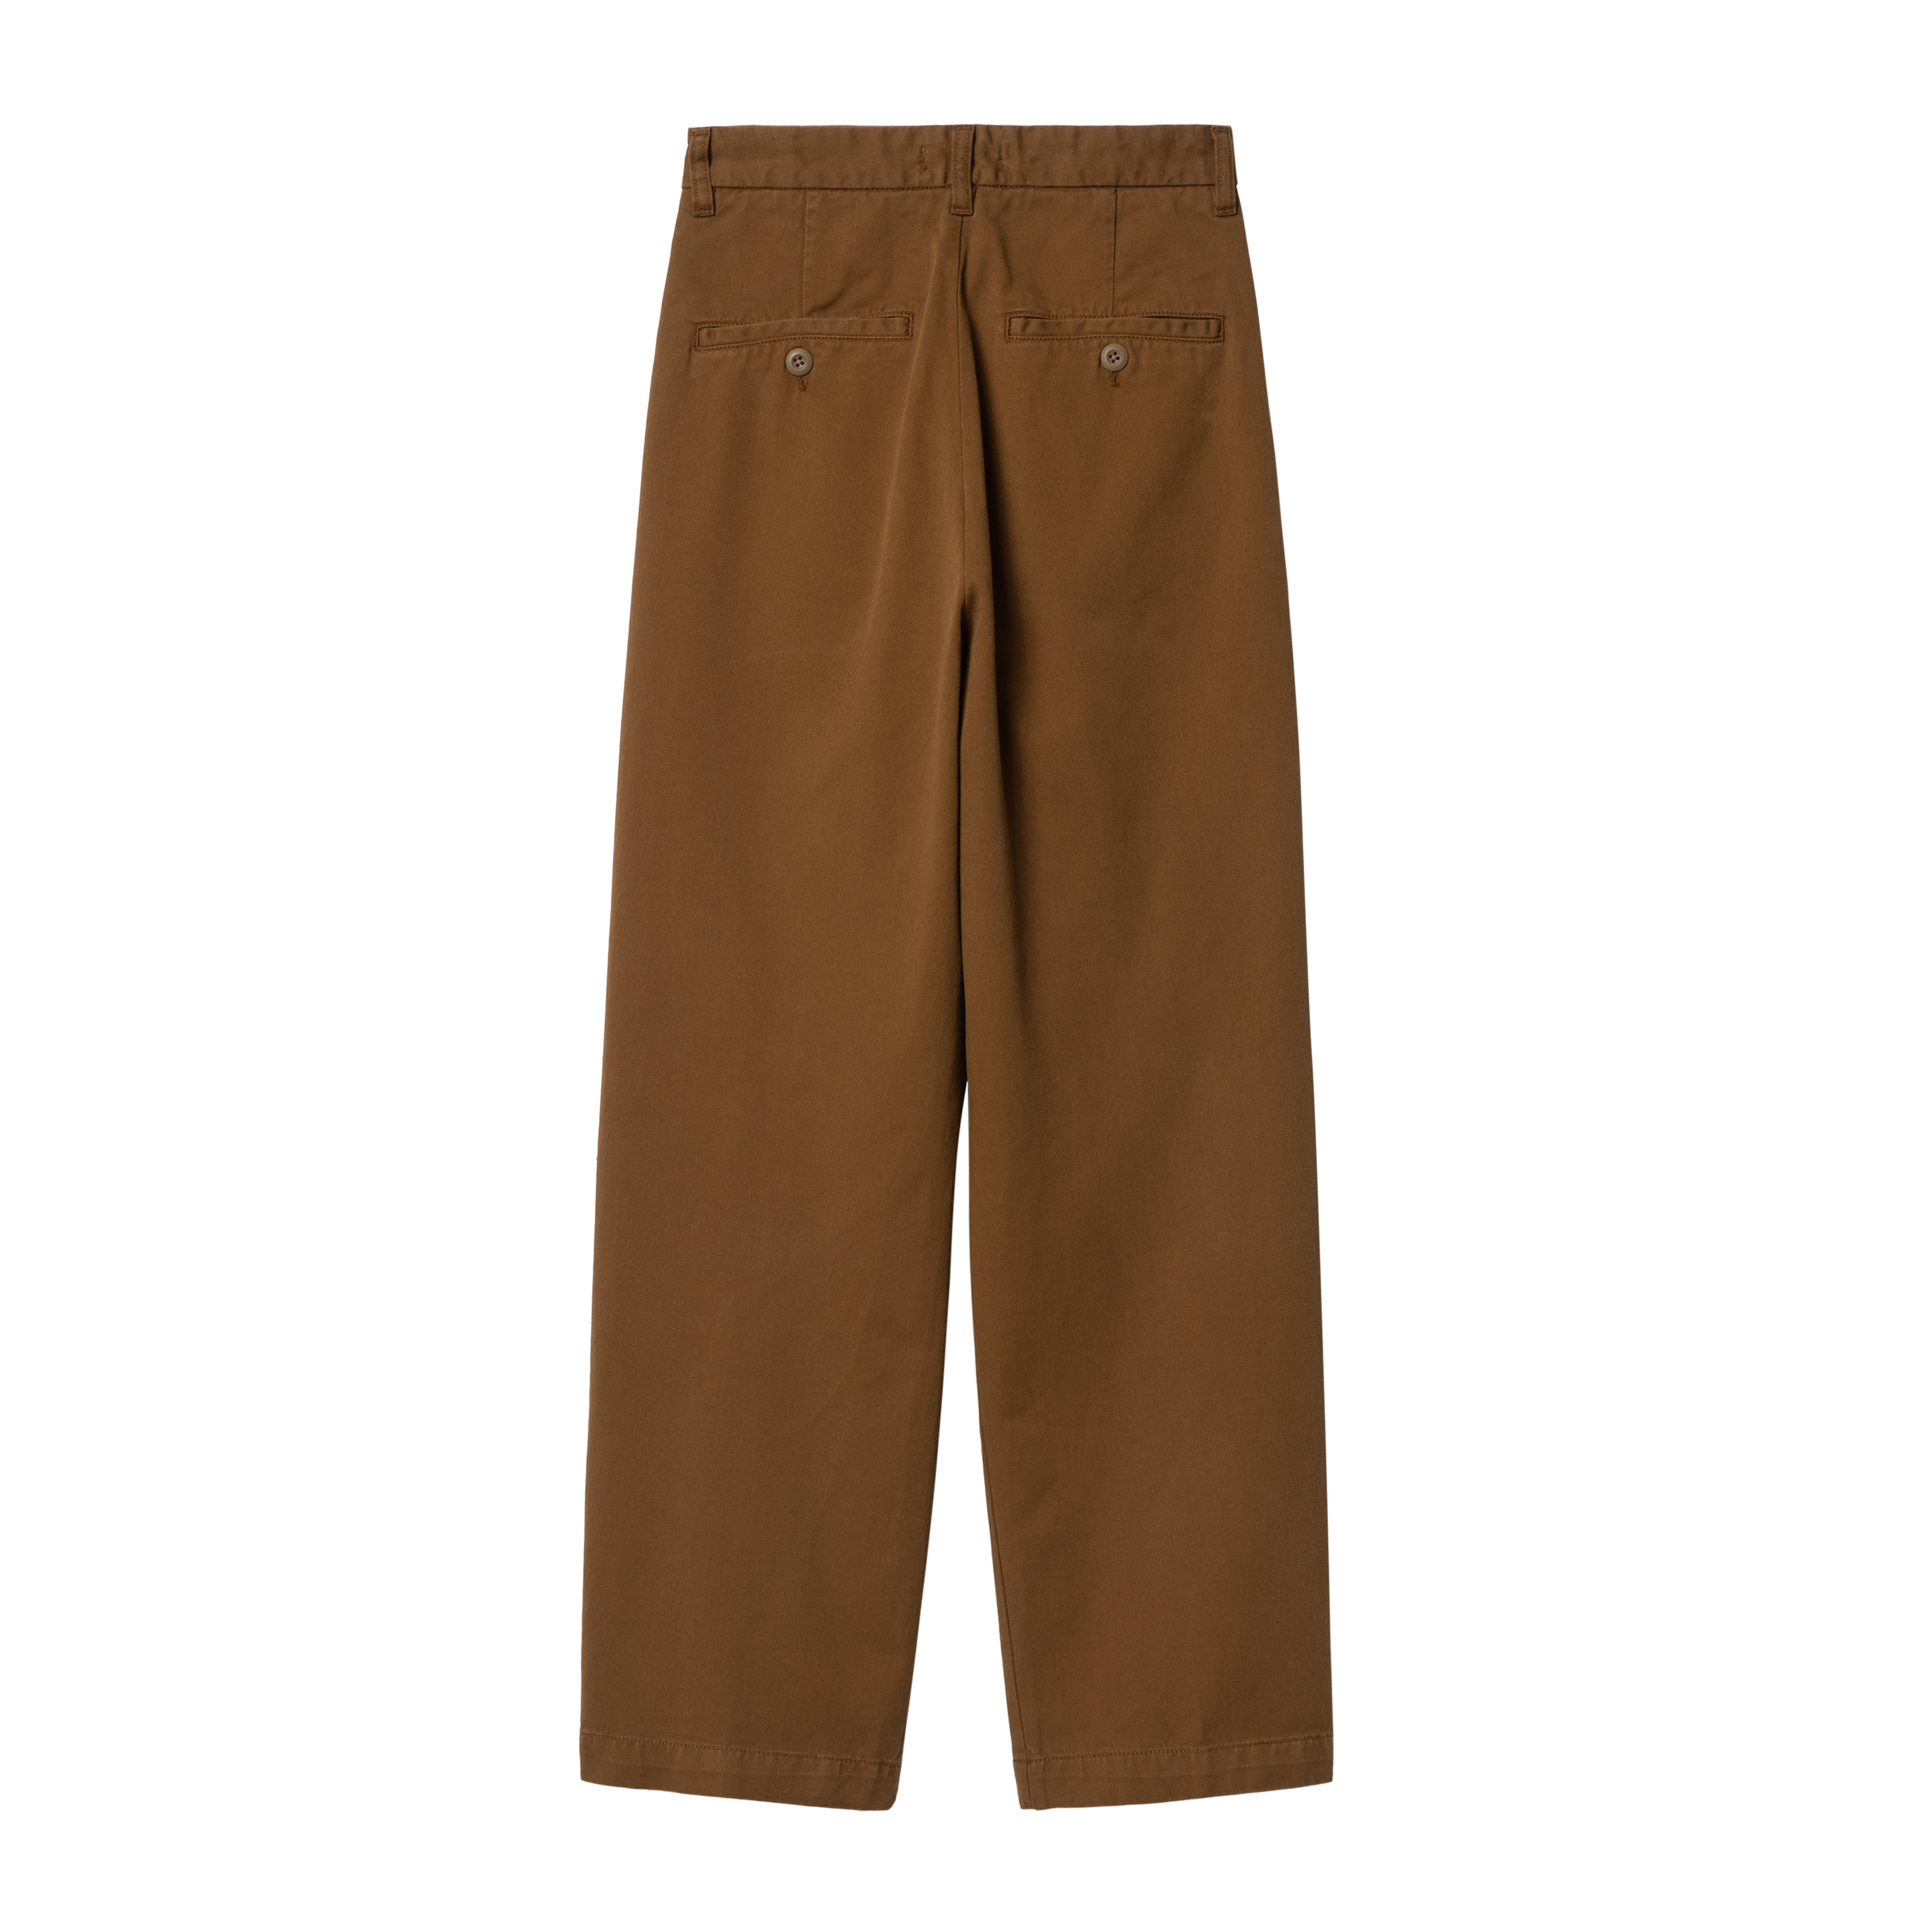 Carhartt WIP - W' CARA PANT - Deep hamilton brown (garment dyed)  